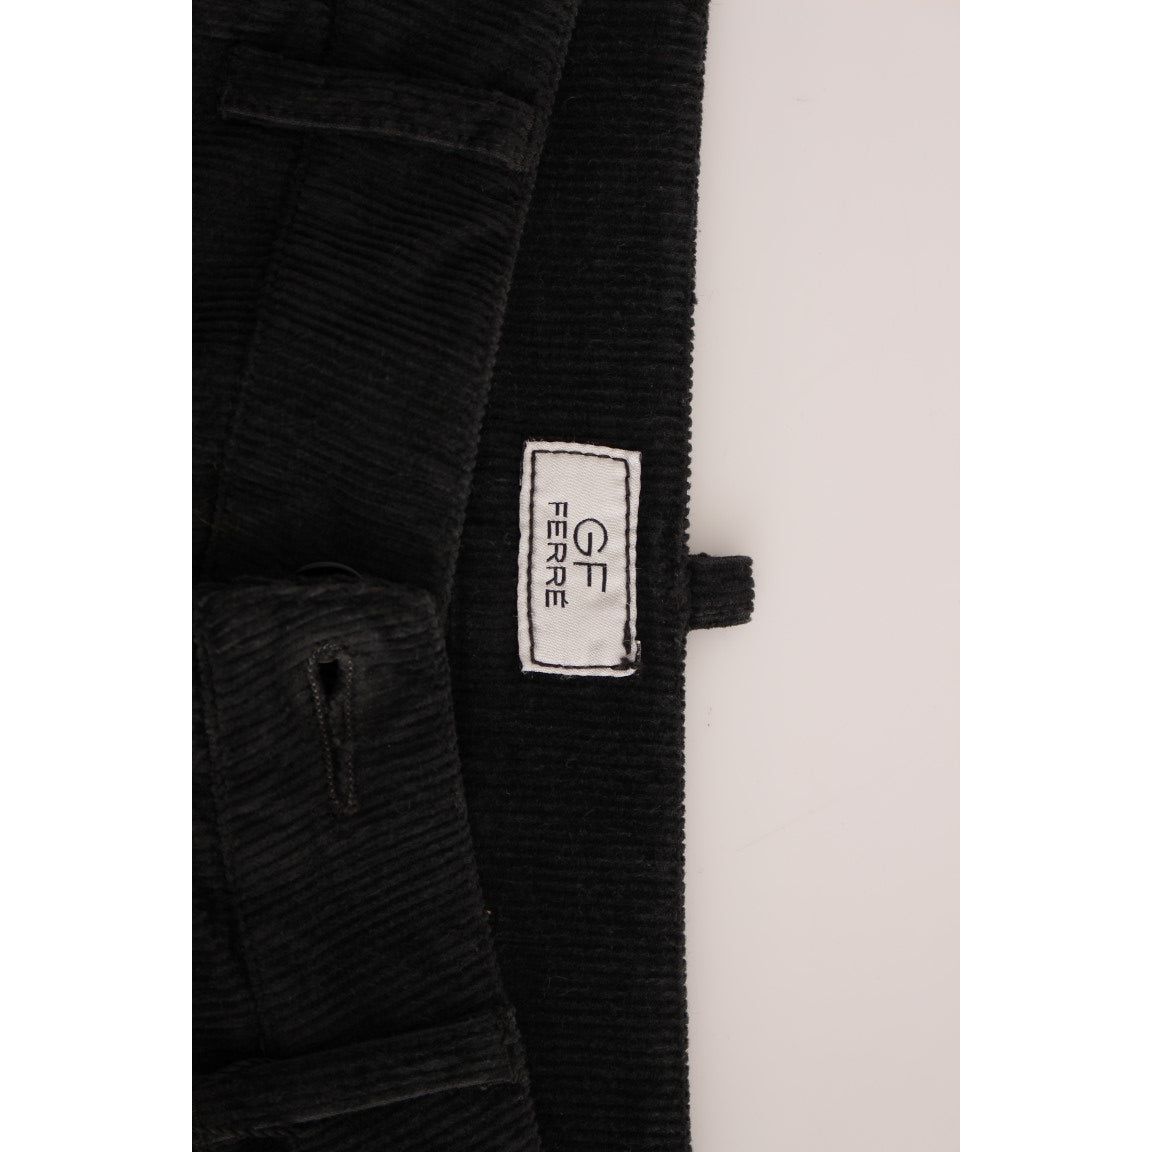 GF Ferre Elegant Black Cotton Corduroy Pants Jeans & Pants black-corduroy-cotton-straight-fit-pants 53278-black-corduroy-cotton-straight-fit-pants-6.jpg